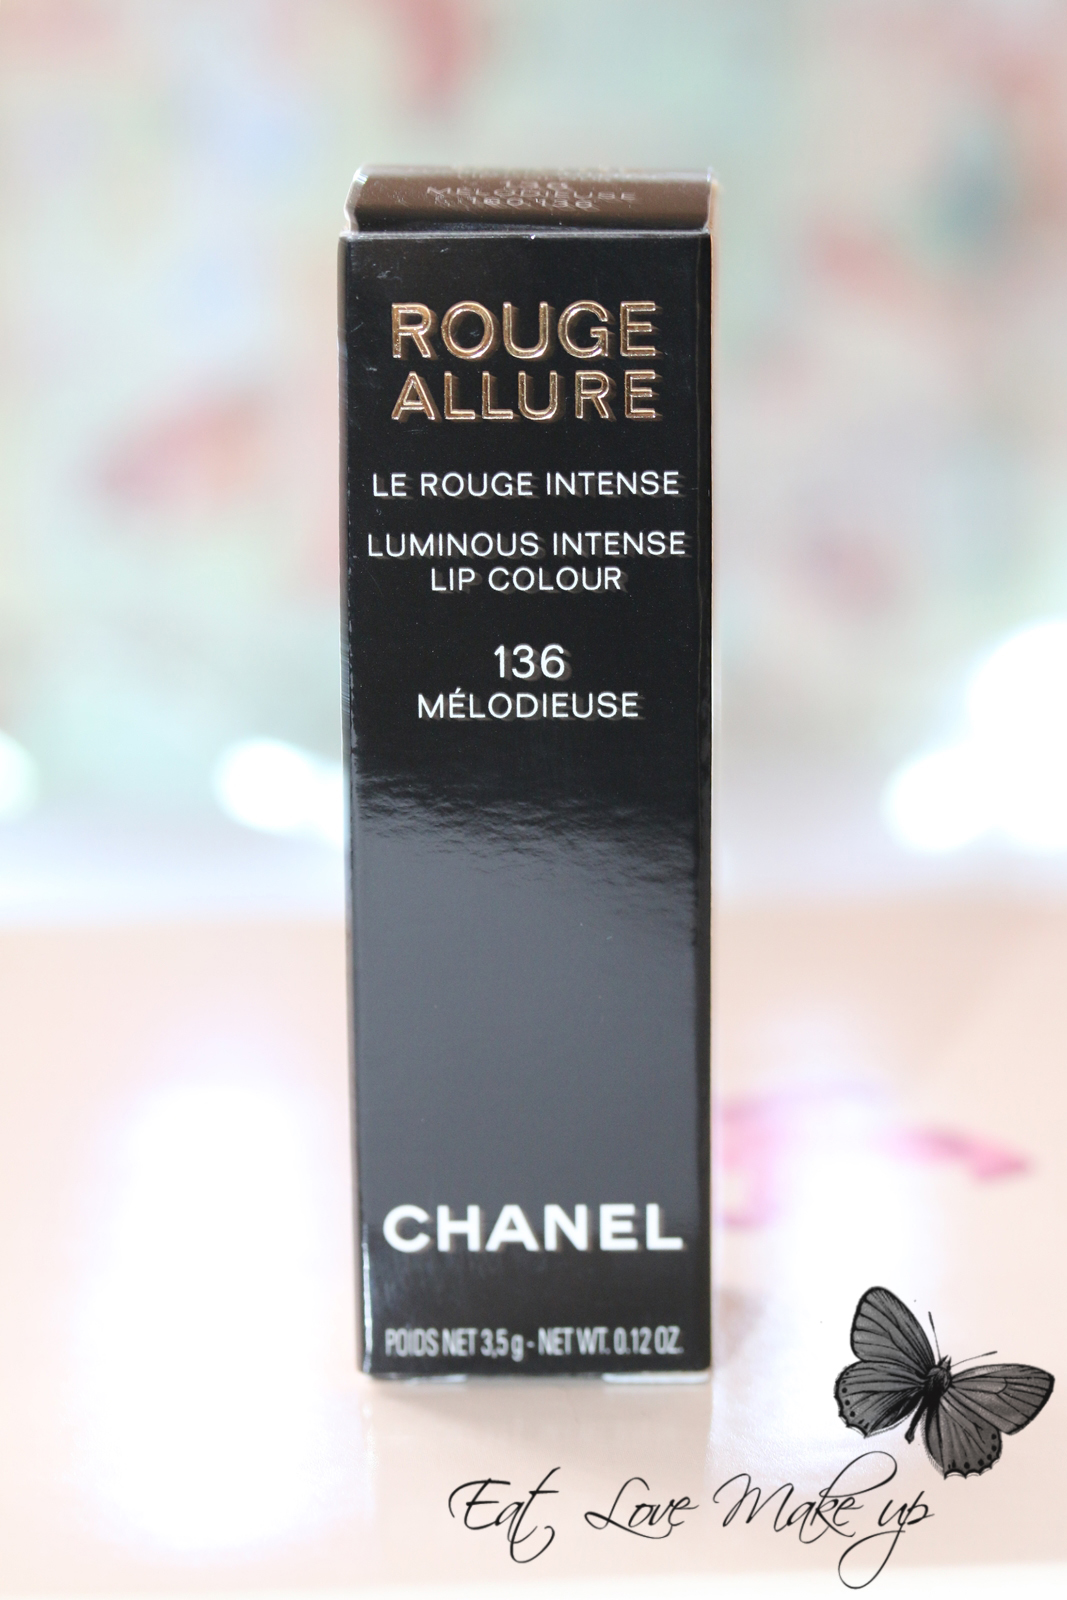 Chanel Rouge Allure Luminous Intense 136 Mélodieuse